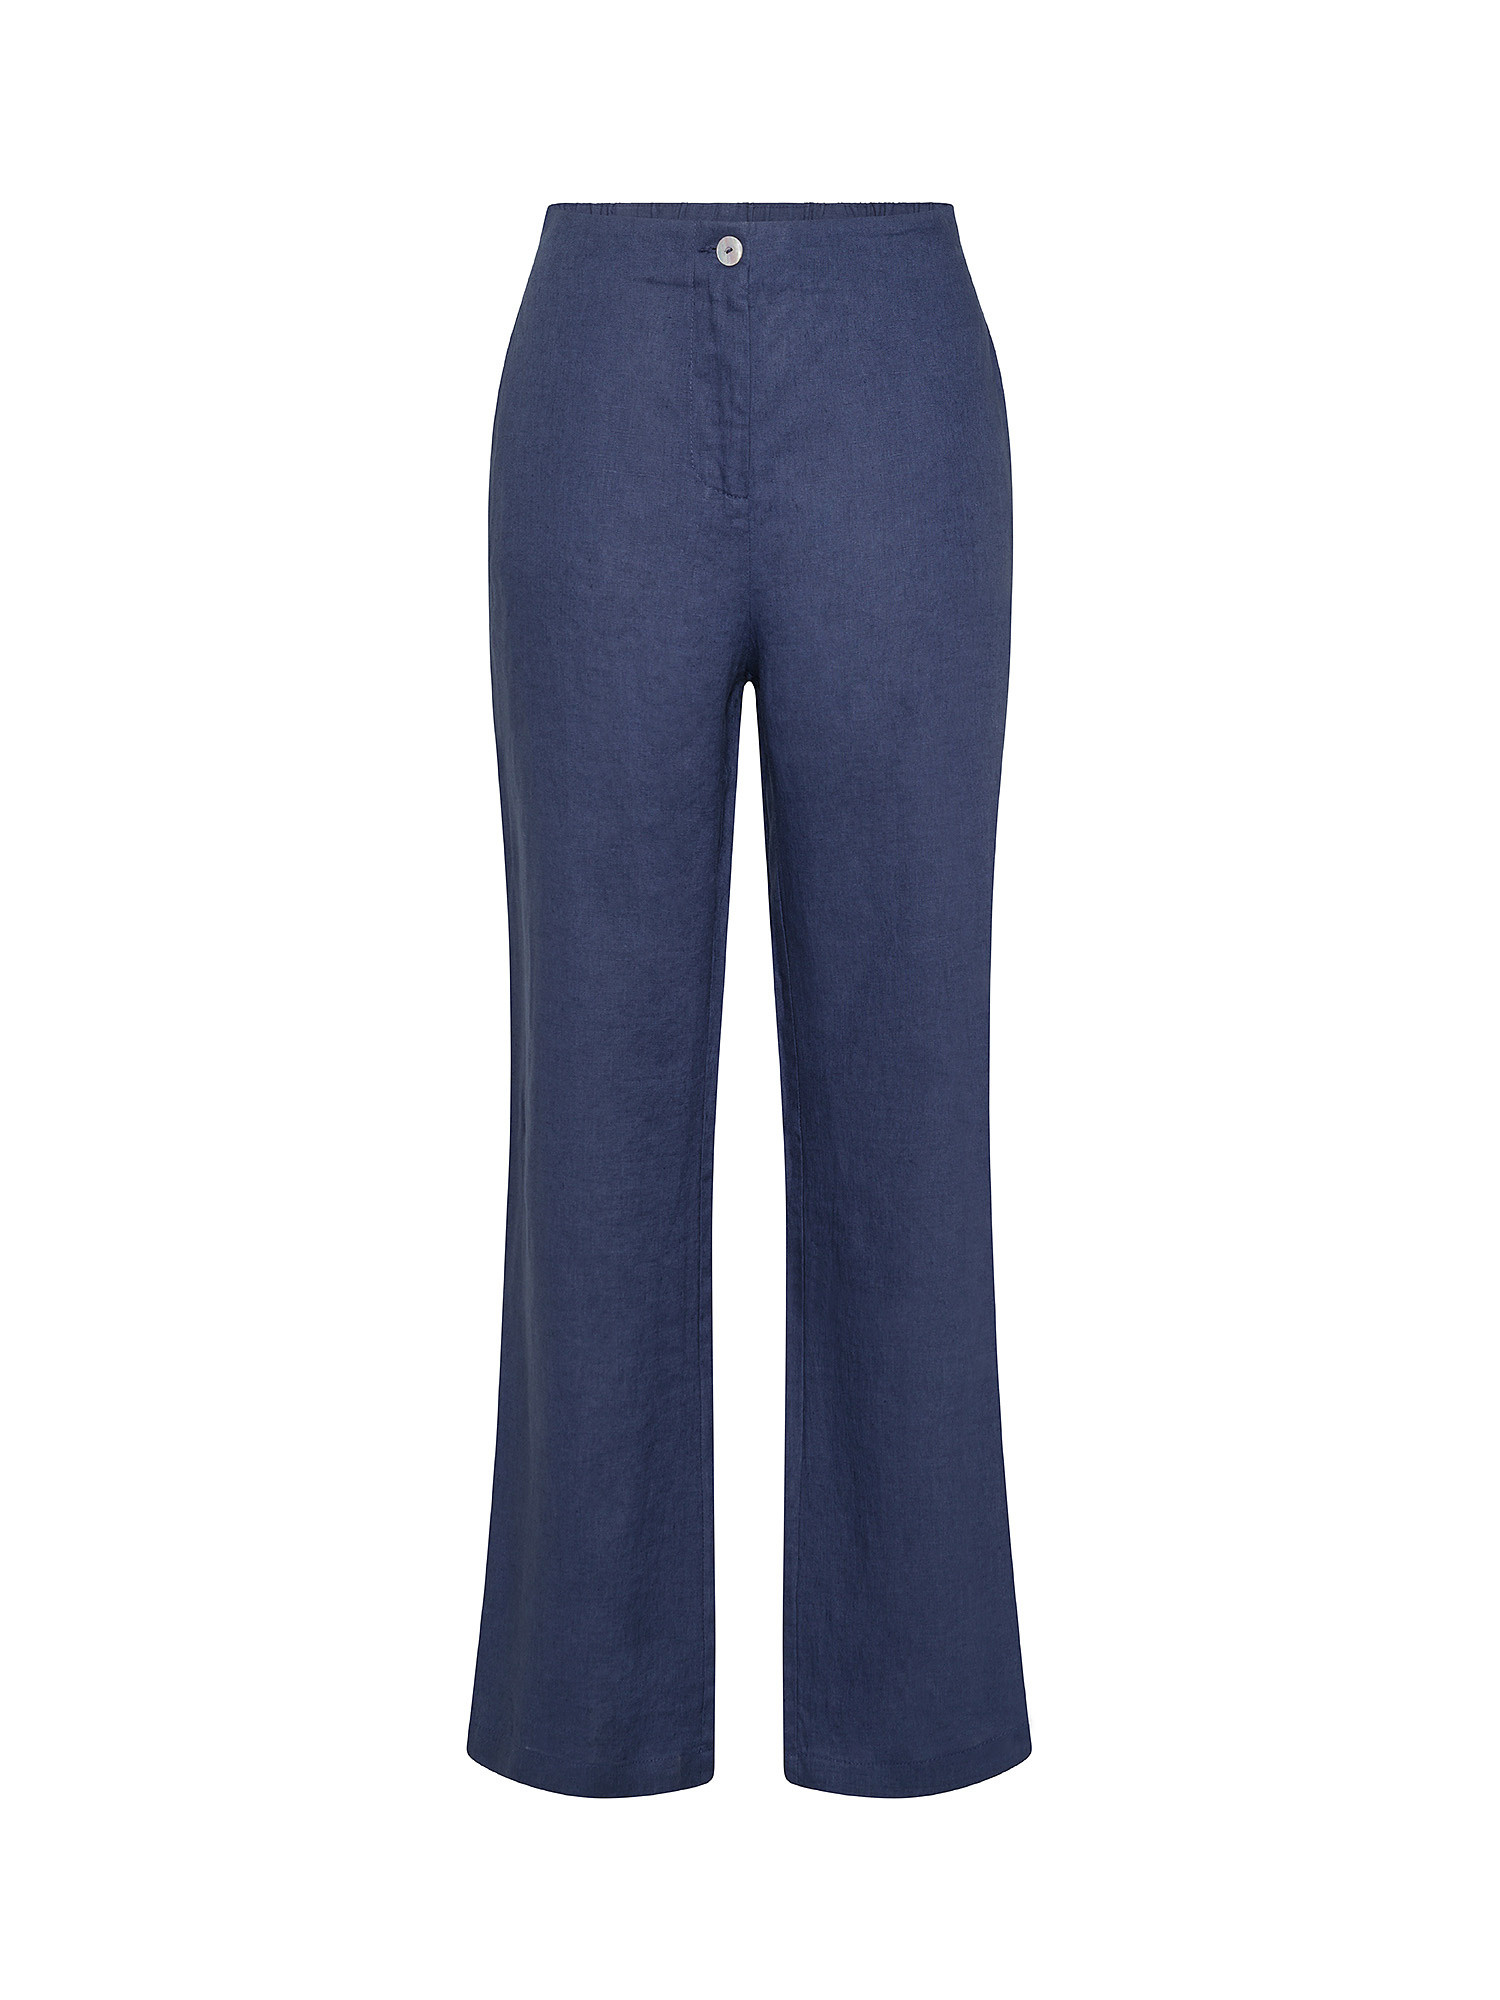 Koan - Pantaloni dritti in lino, Blu, large image number 0